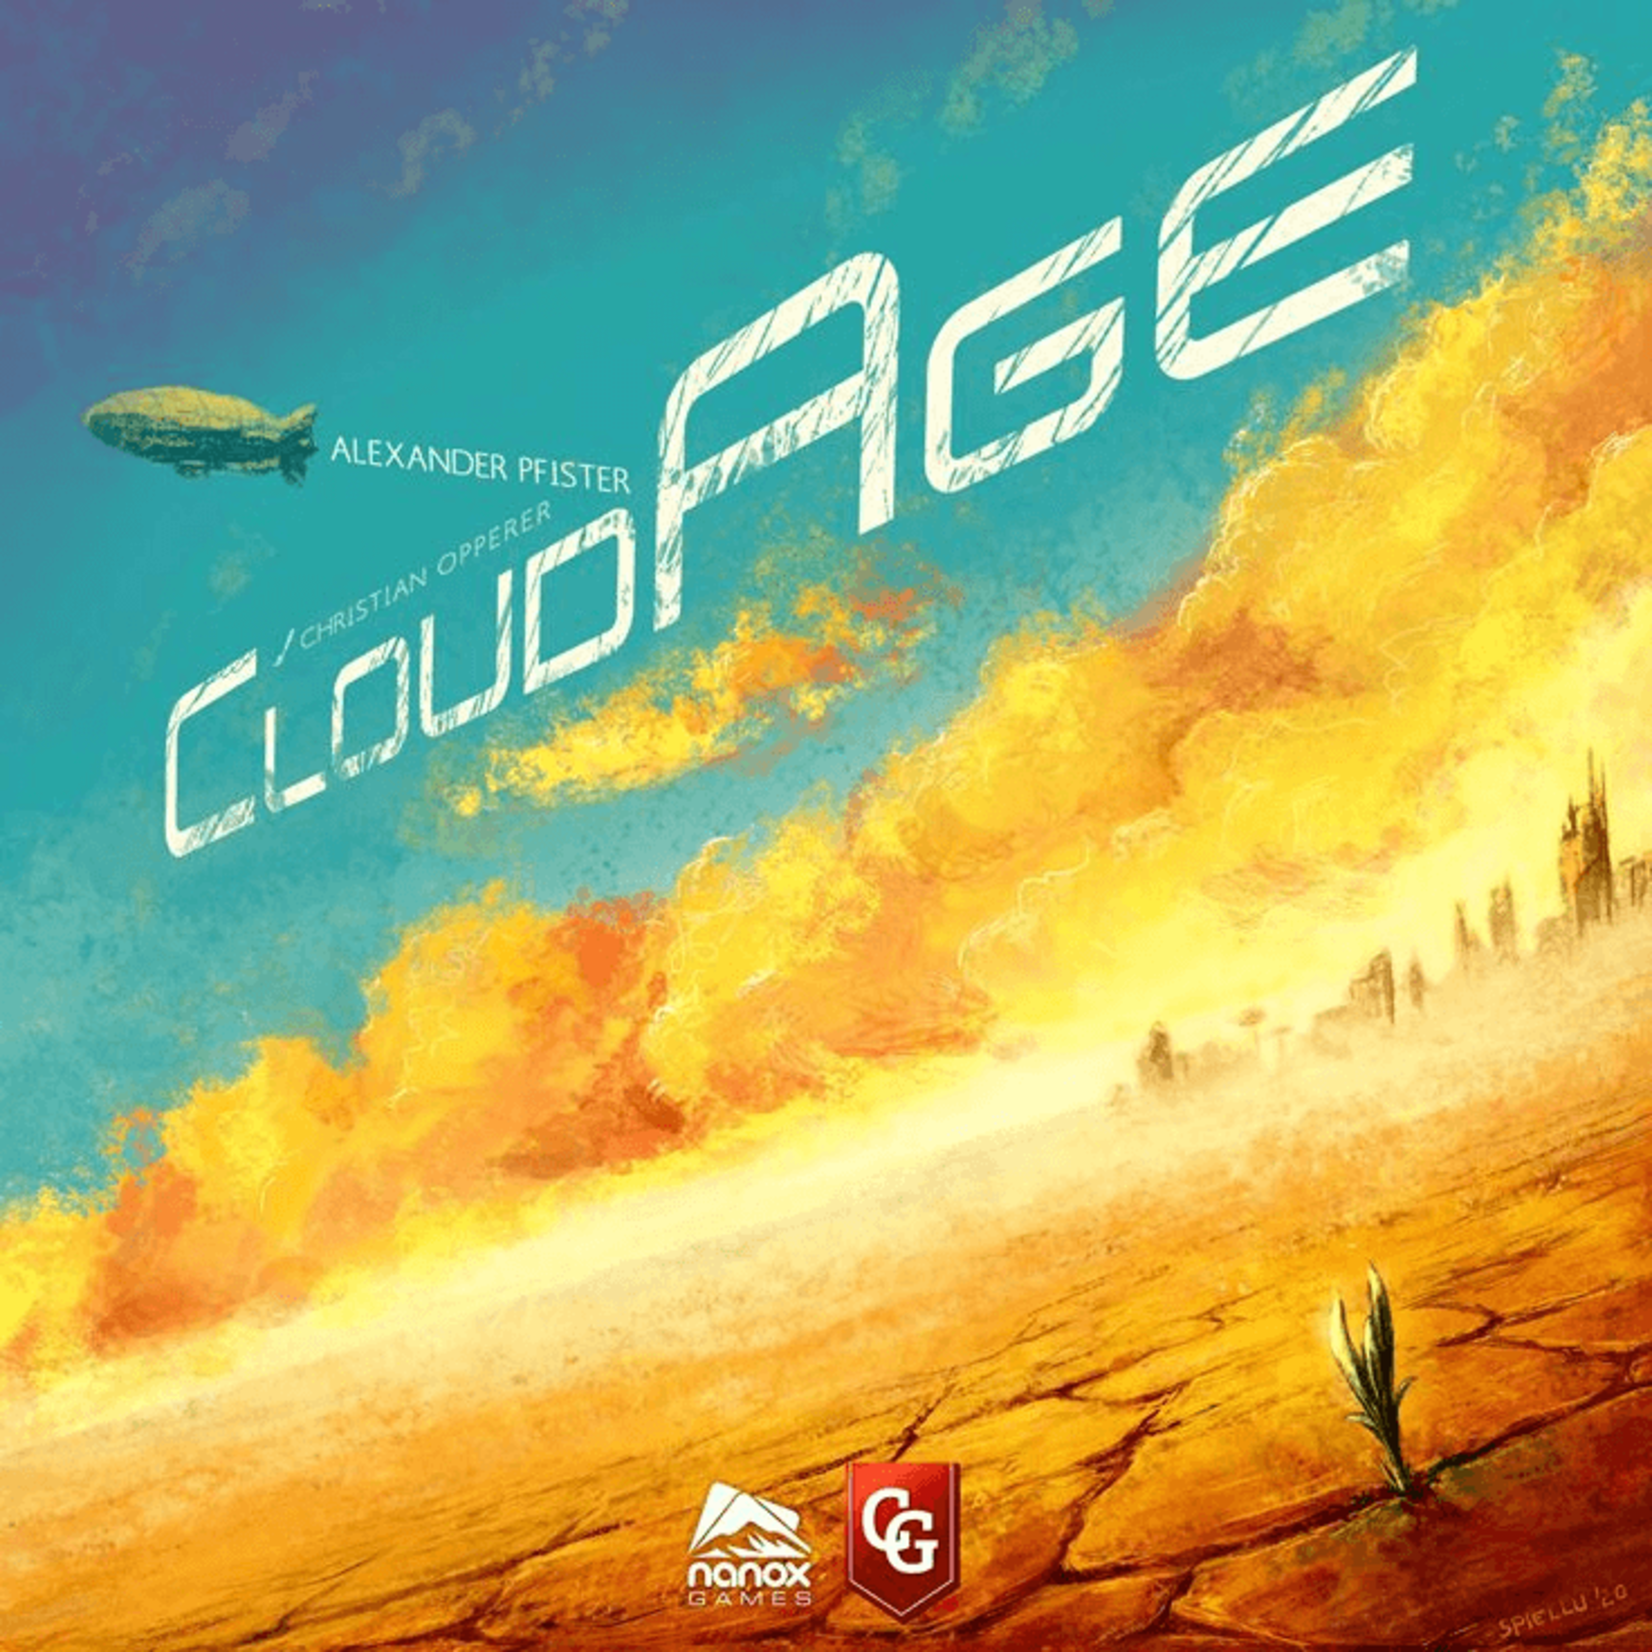 Capstone Games CloudAge